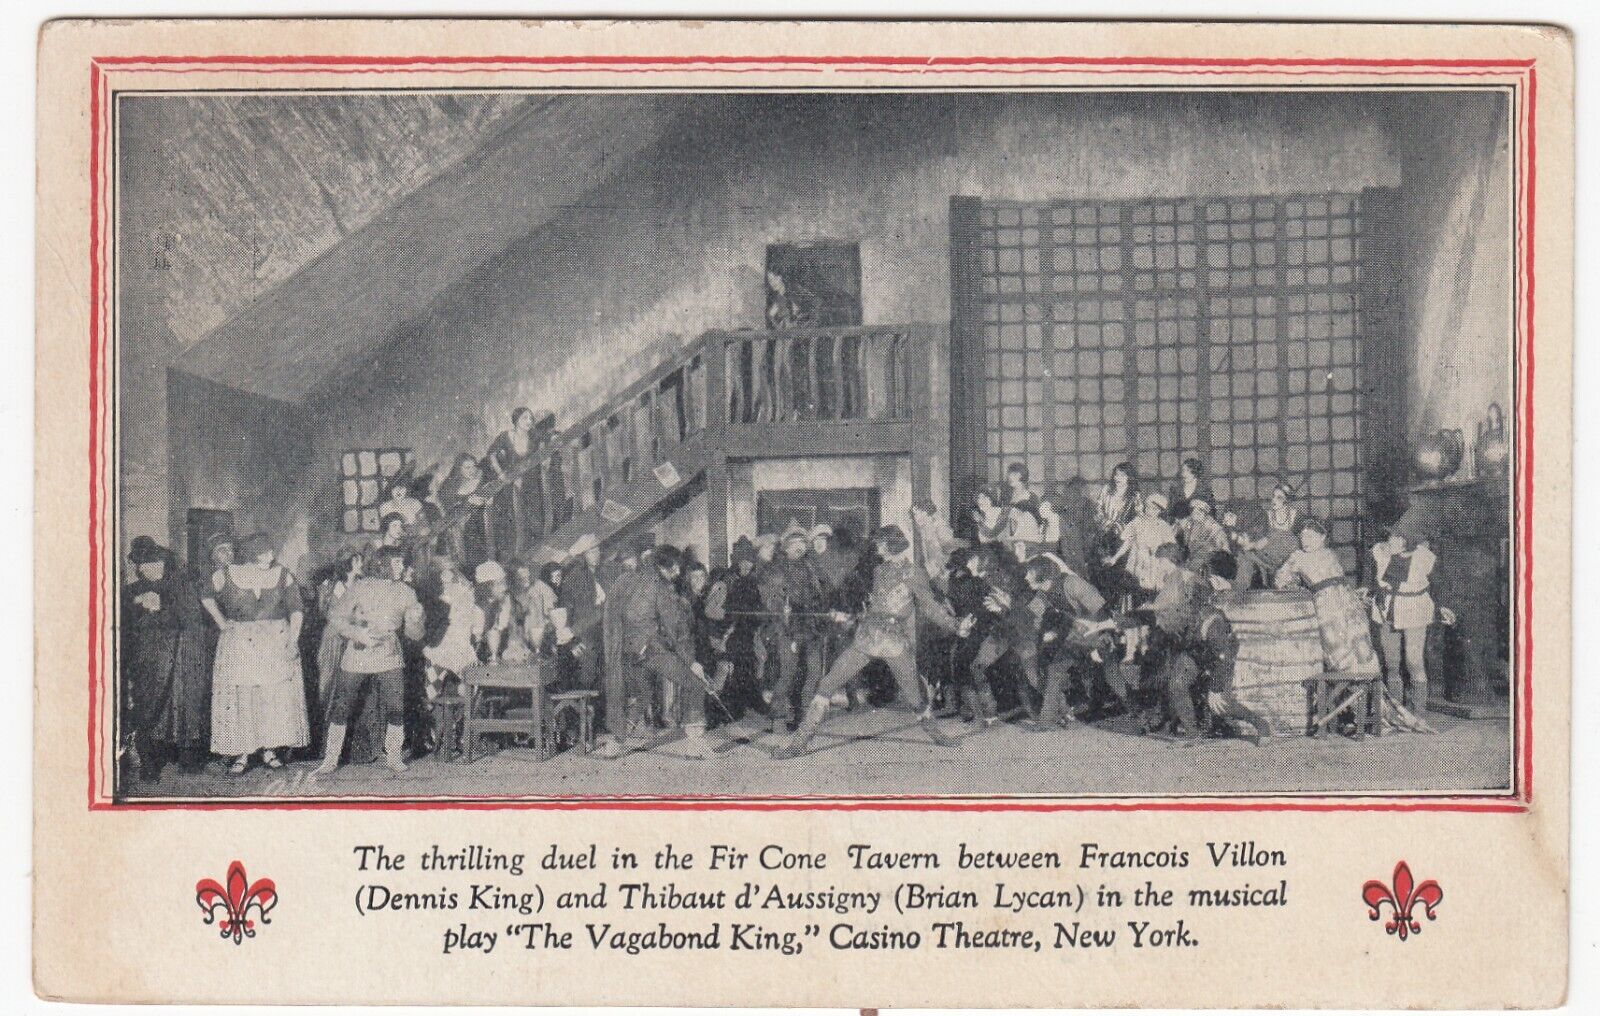 c1920s Casino Theatre, New York City Vagabond King Operetta Advertising Postcard